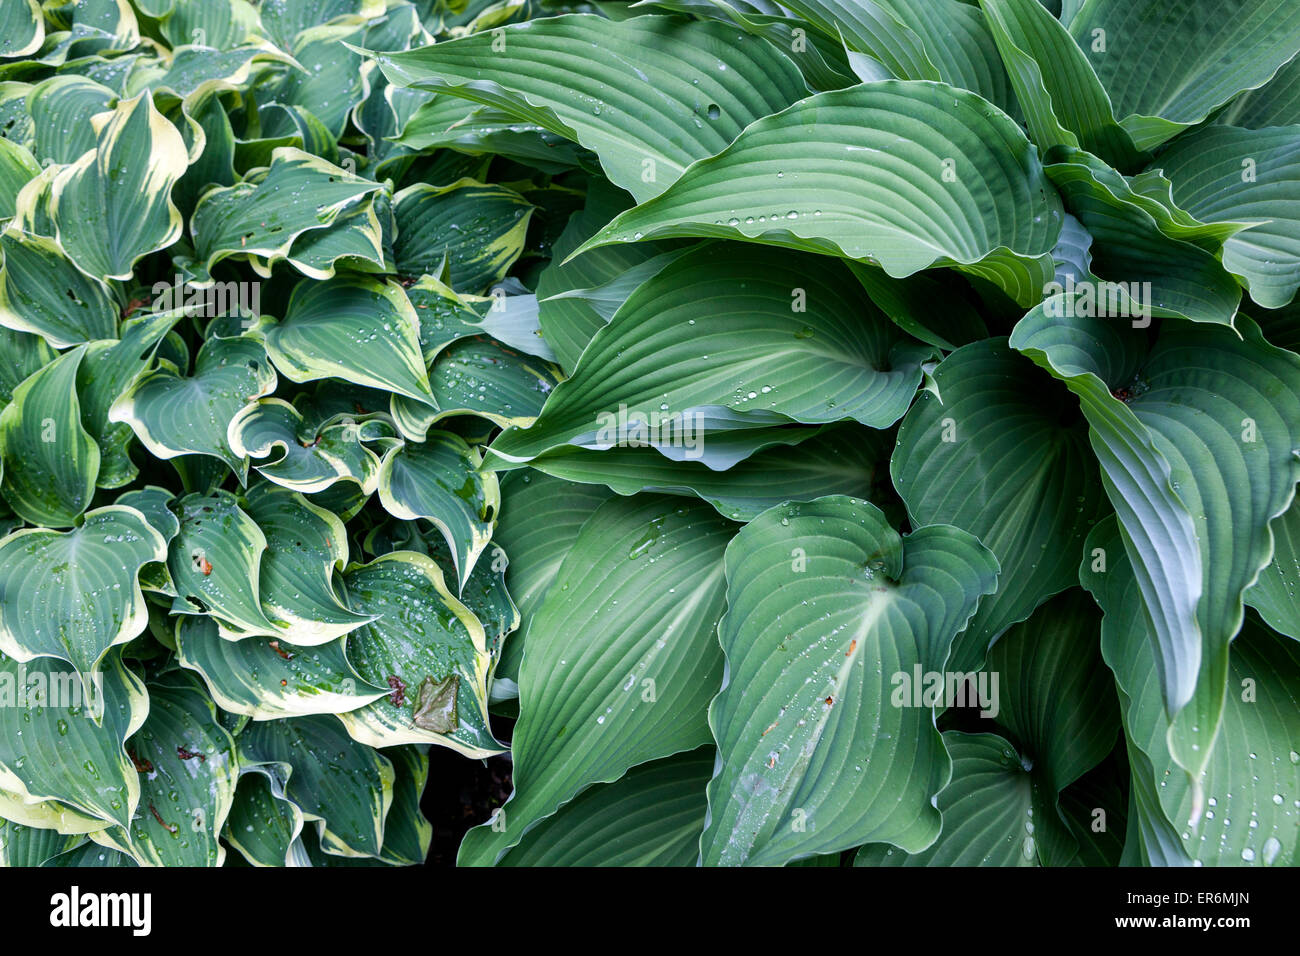 Plant with decorative and ornamental foliage - Hosta Stock Photo